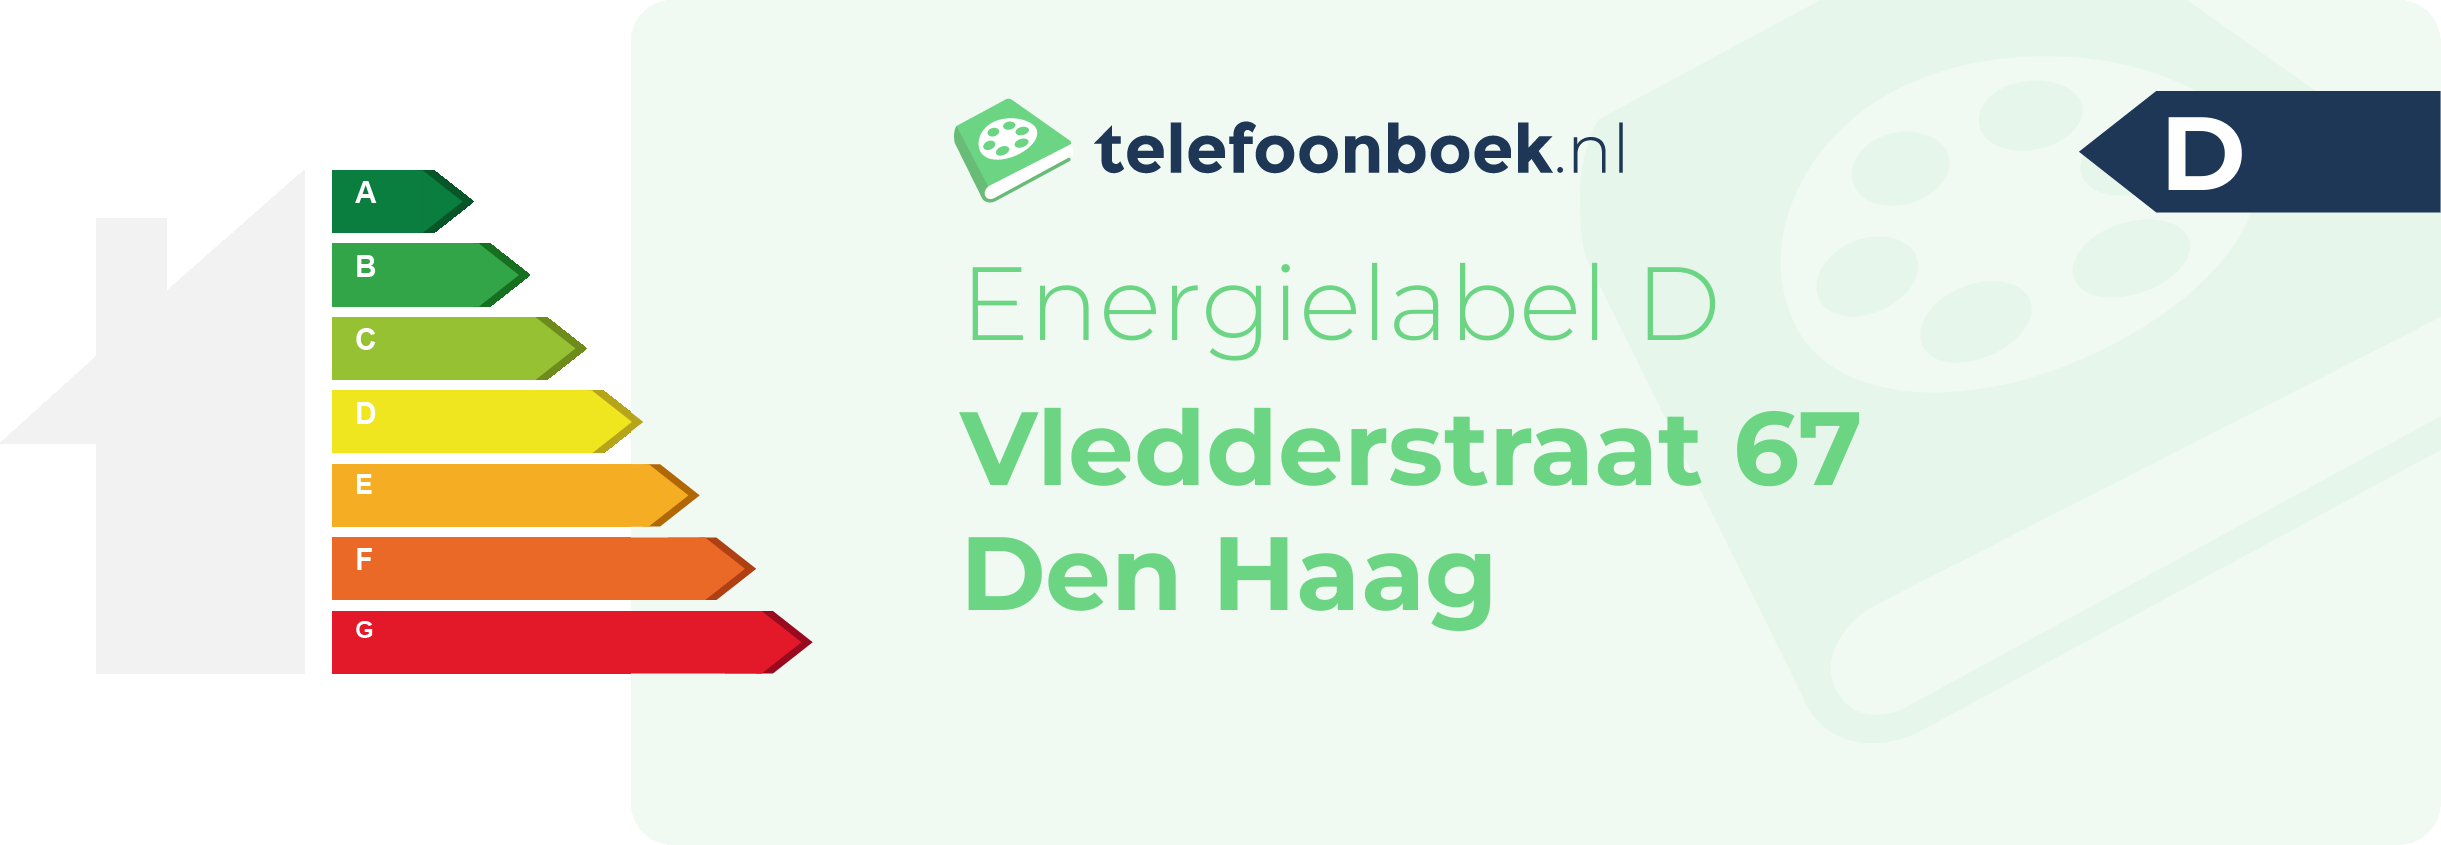 Energielabel Vledderstraat 67 Den Haag